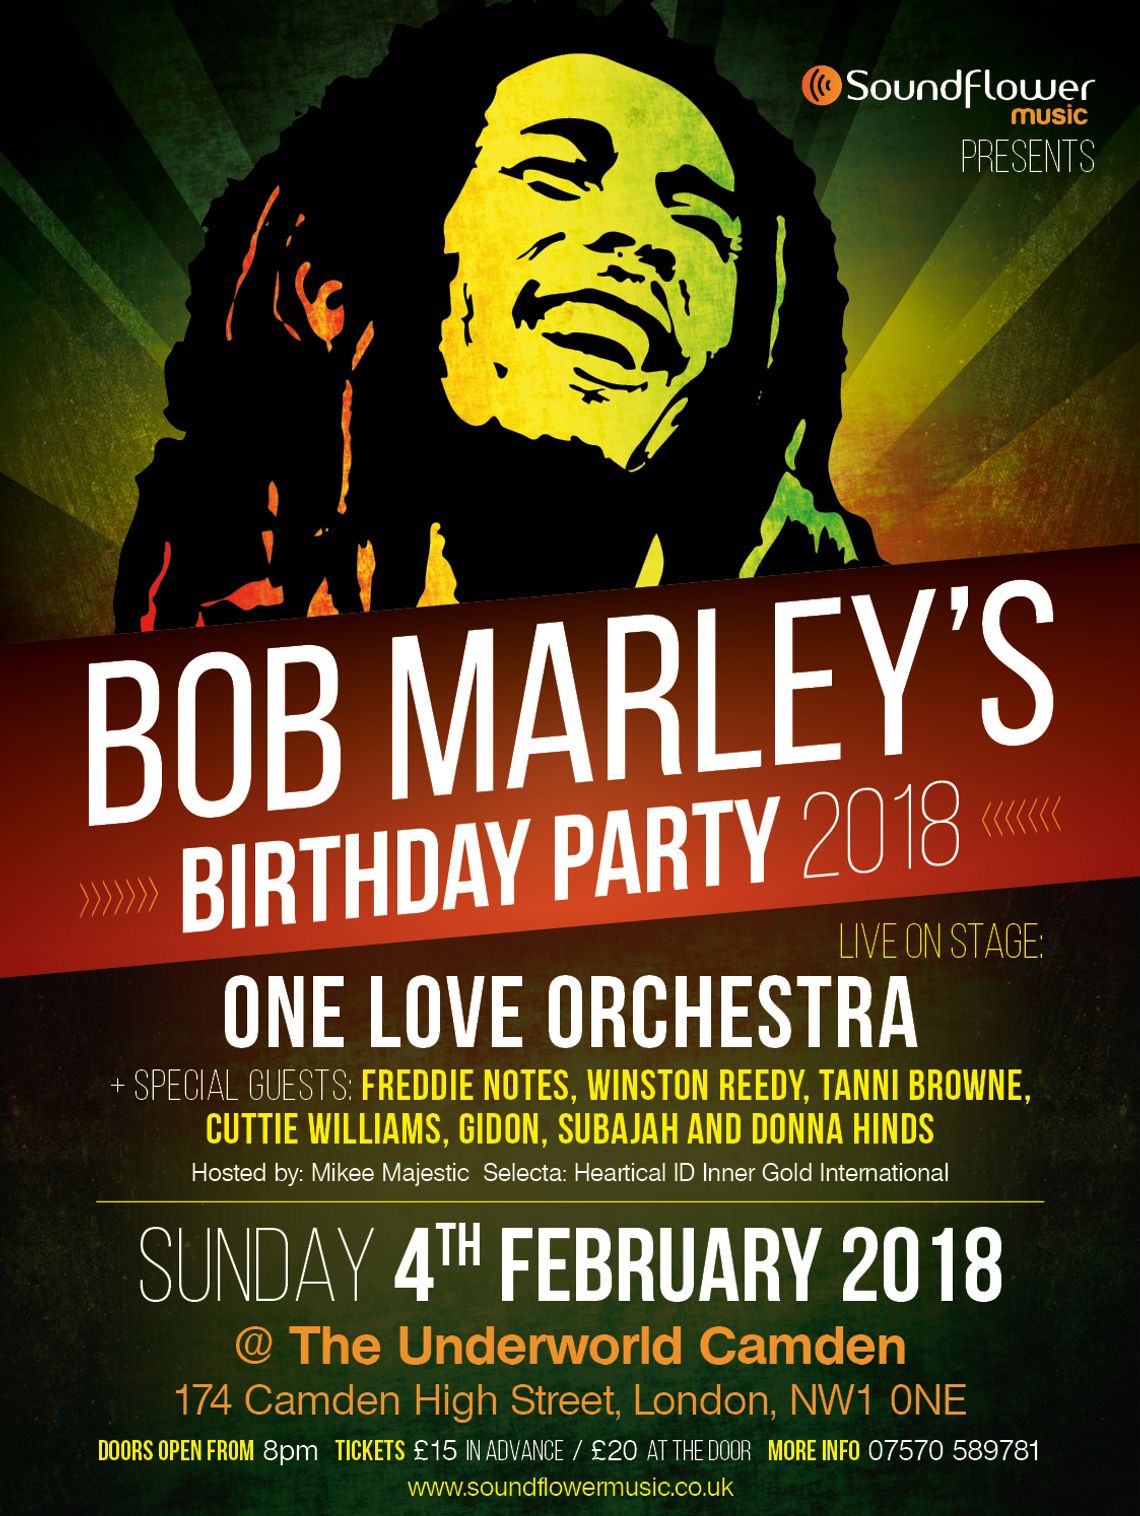 BOB MARLEY'S BIRTHDAY PARTY 2018 - LONDON